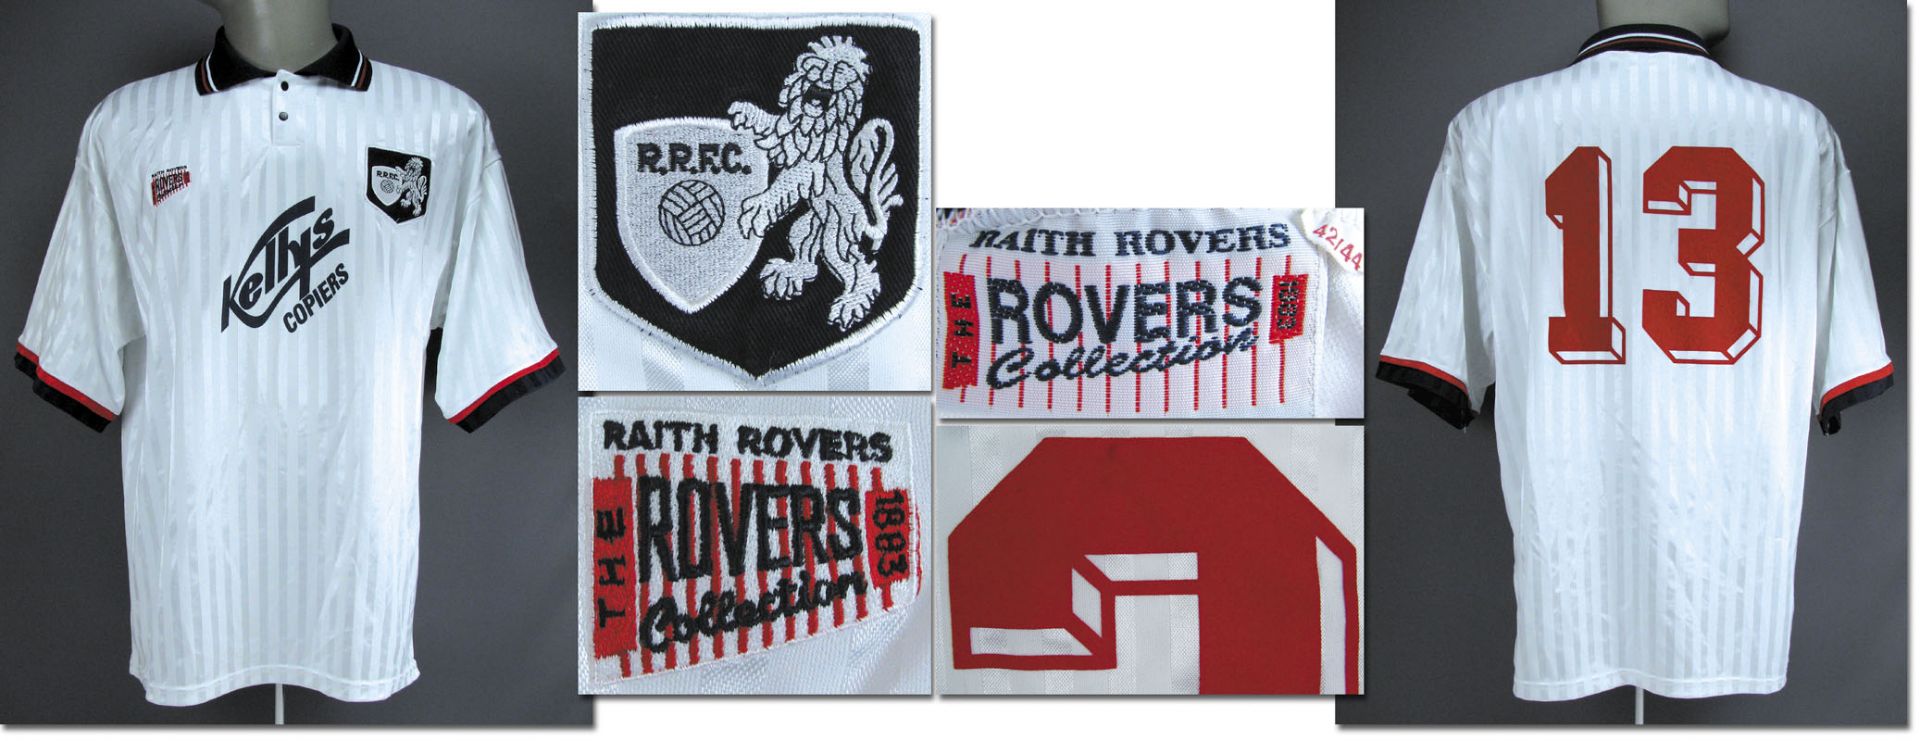 match worn football shirt Raith Rovers 1995/96 - Original match worn shirt Raith Rovers FC with numb - Image 3 of 3